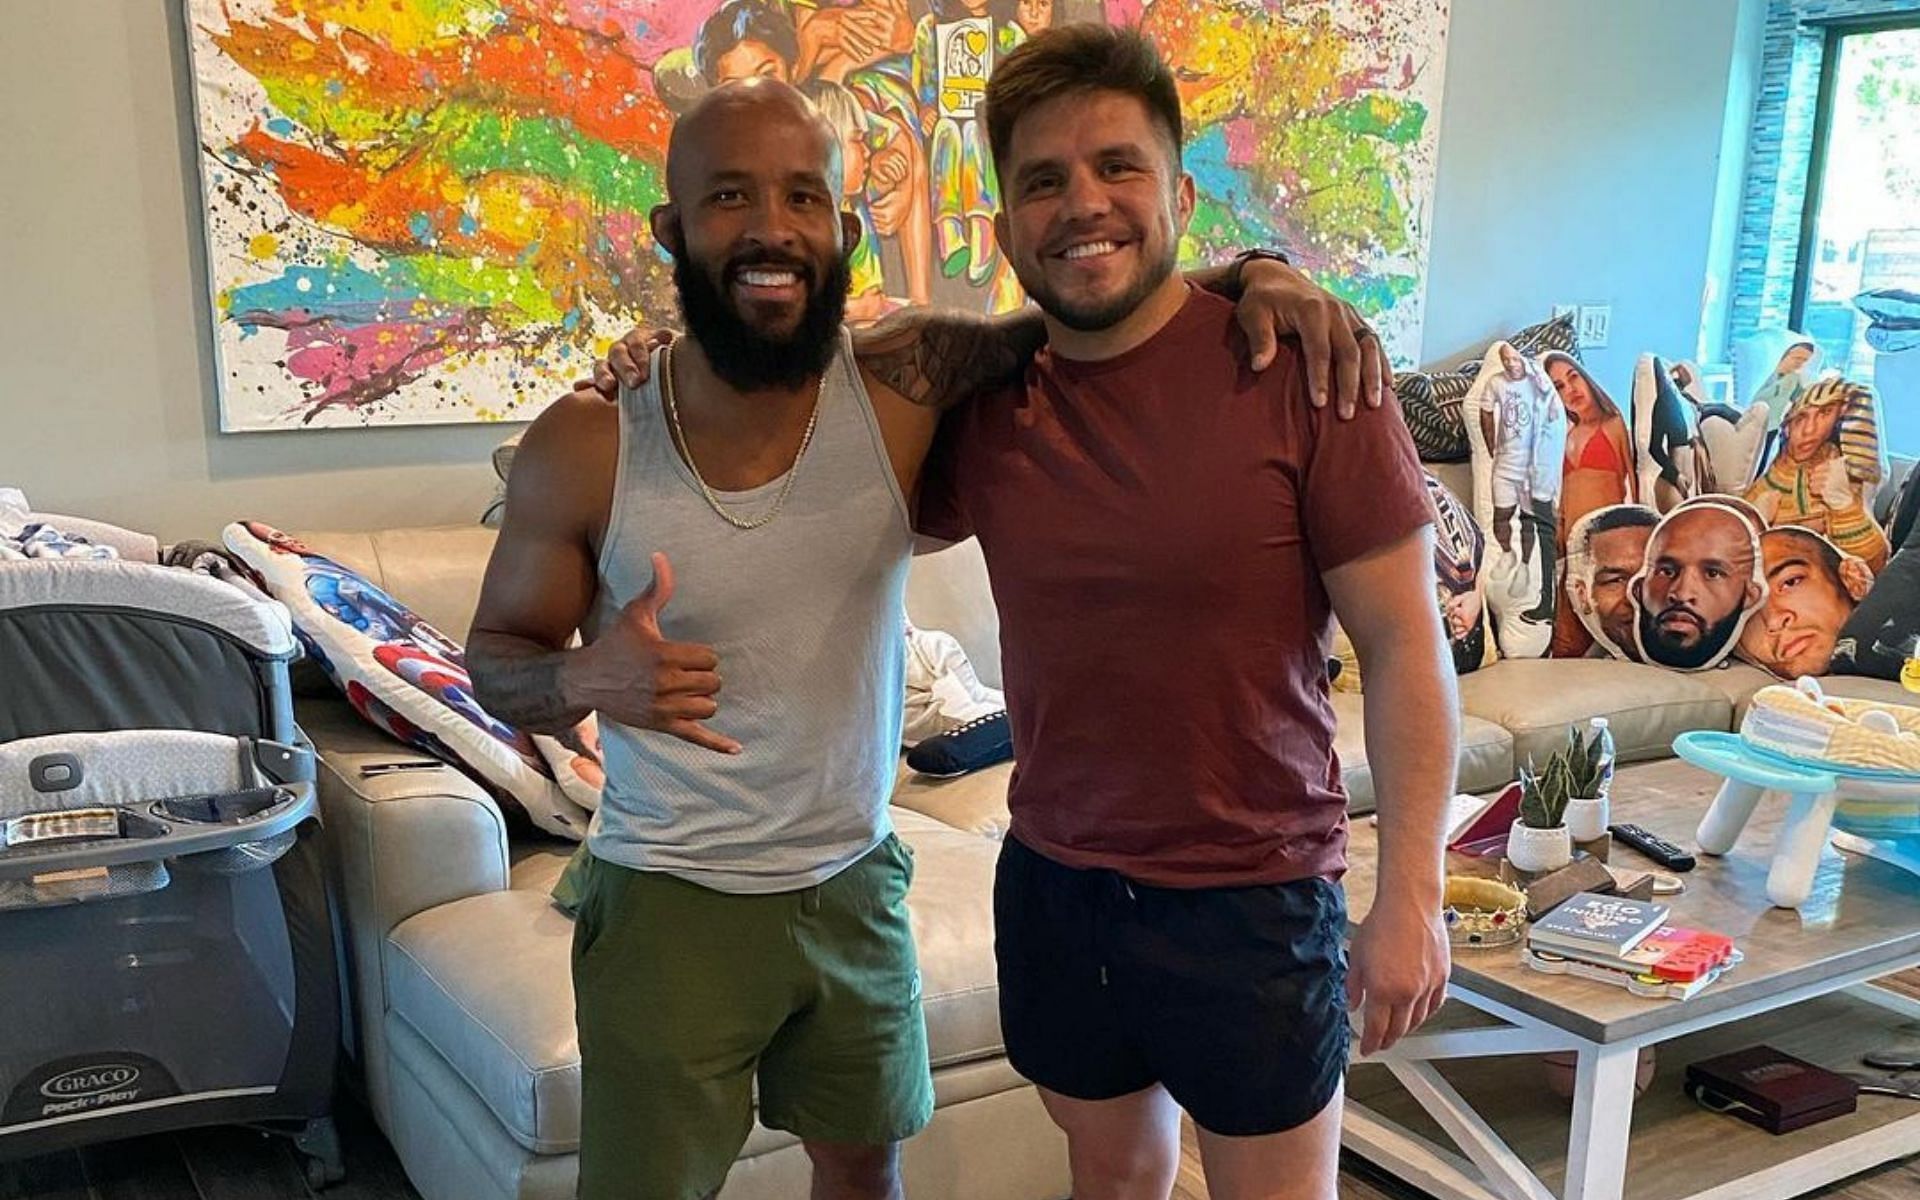 Demetrious Johnson (left) and Henry Cejudo [Image Courtesy: @henry_cejudo on Instagram]